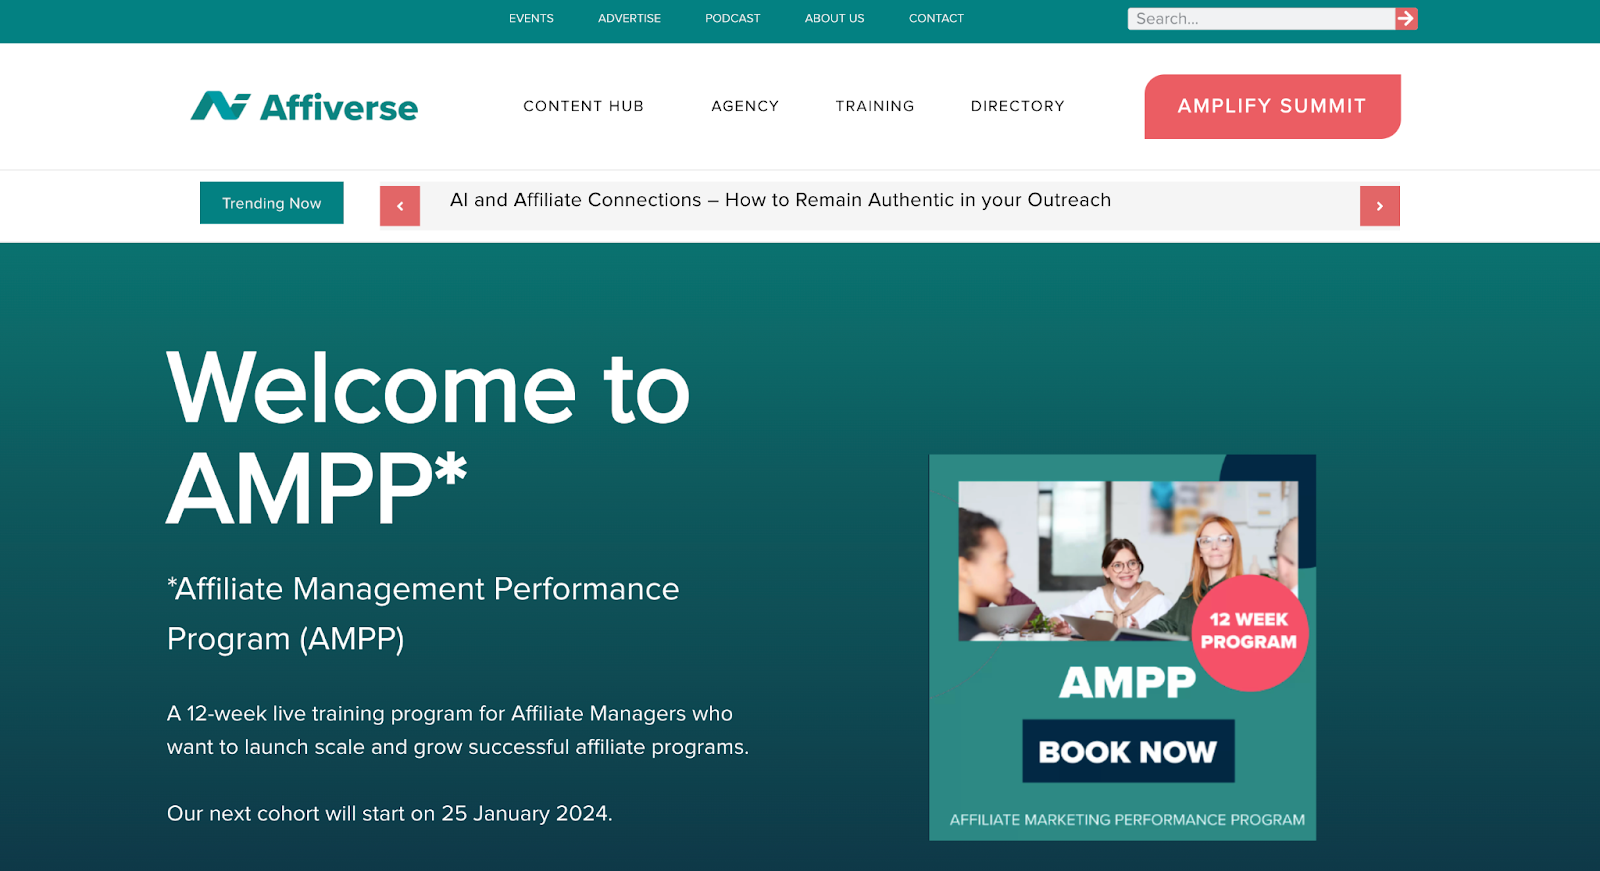 Affiverse affiliate management performance program